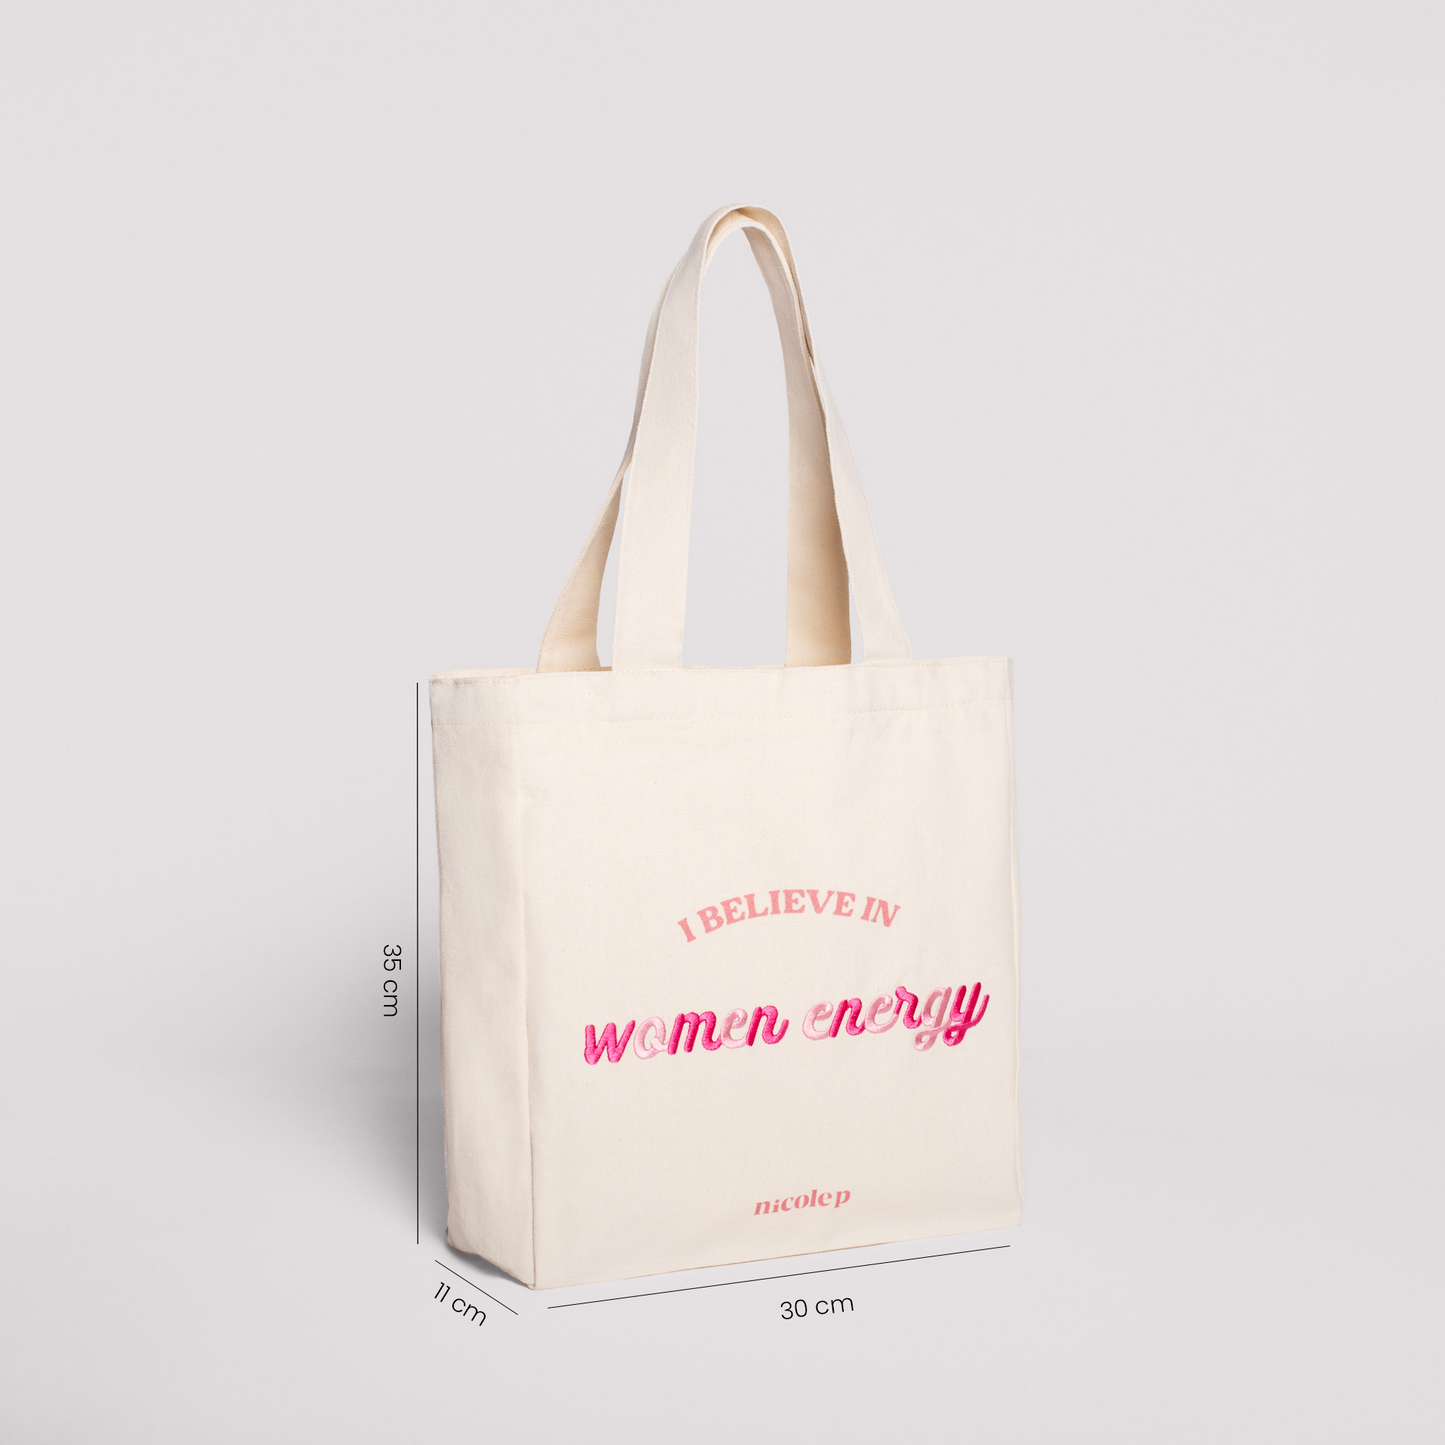 Women Energy - small tote bag